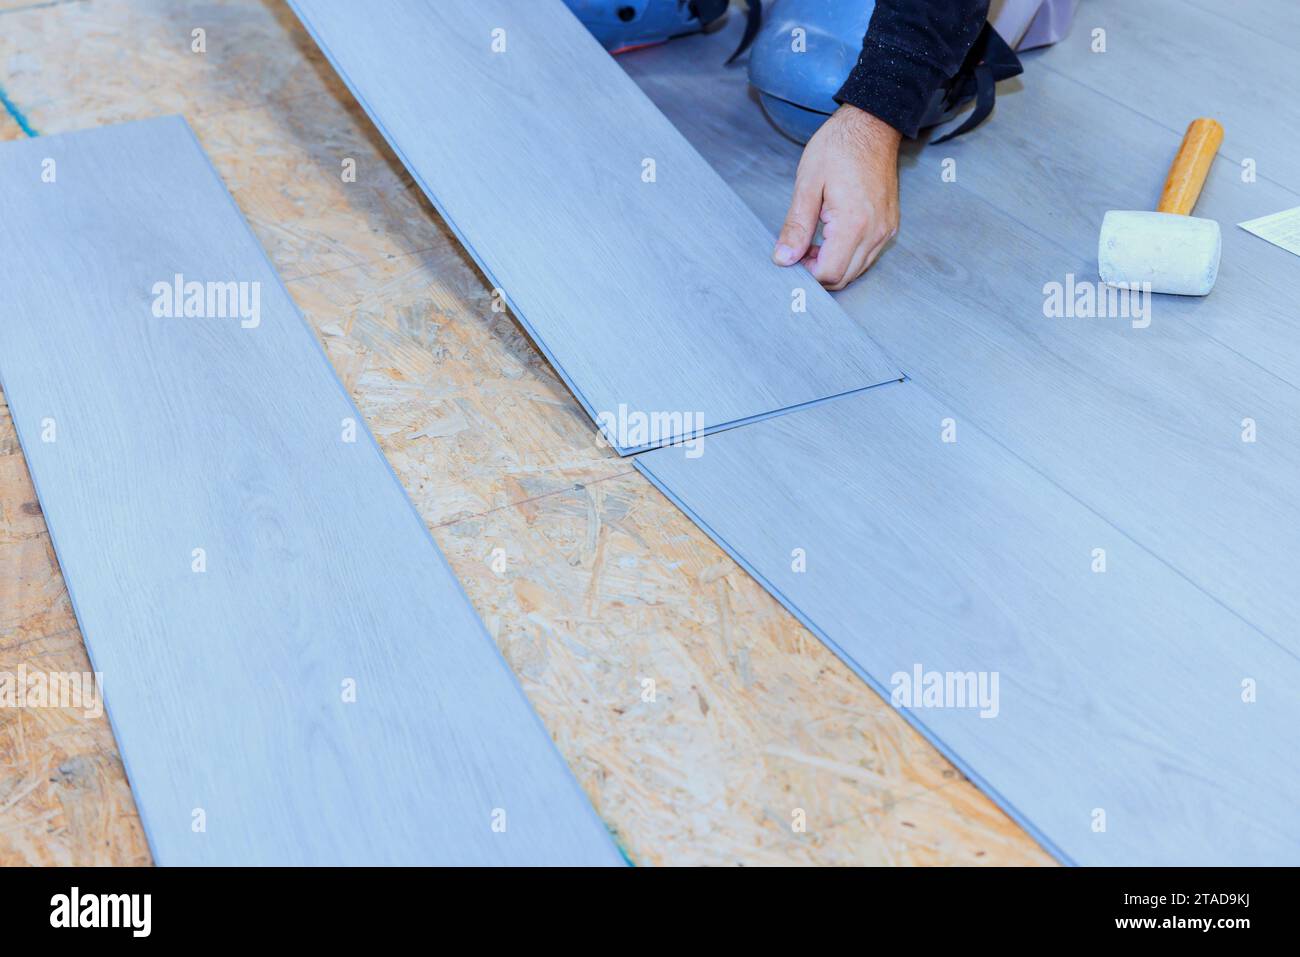 In new residence house worker is installing vinyl laminate flooring Stock Photo